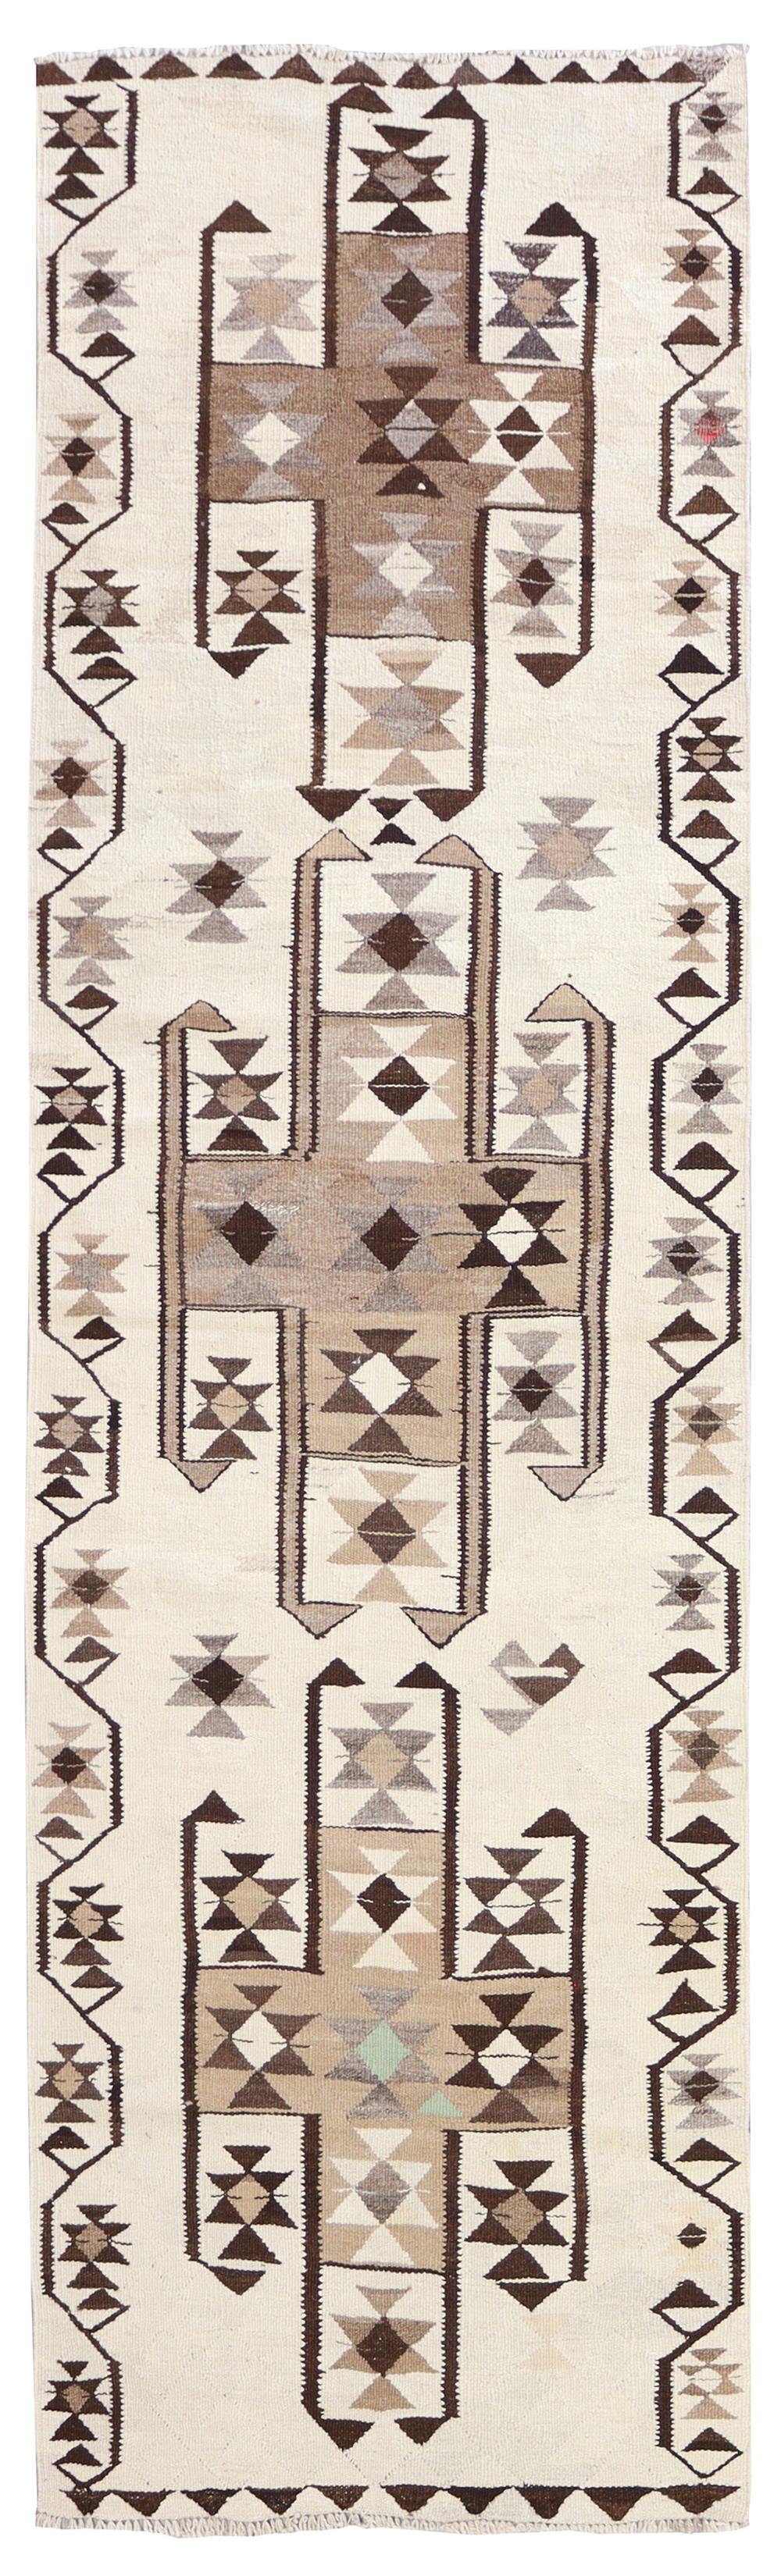 Vintage Herki Kilim Handwoven Tribal Rug